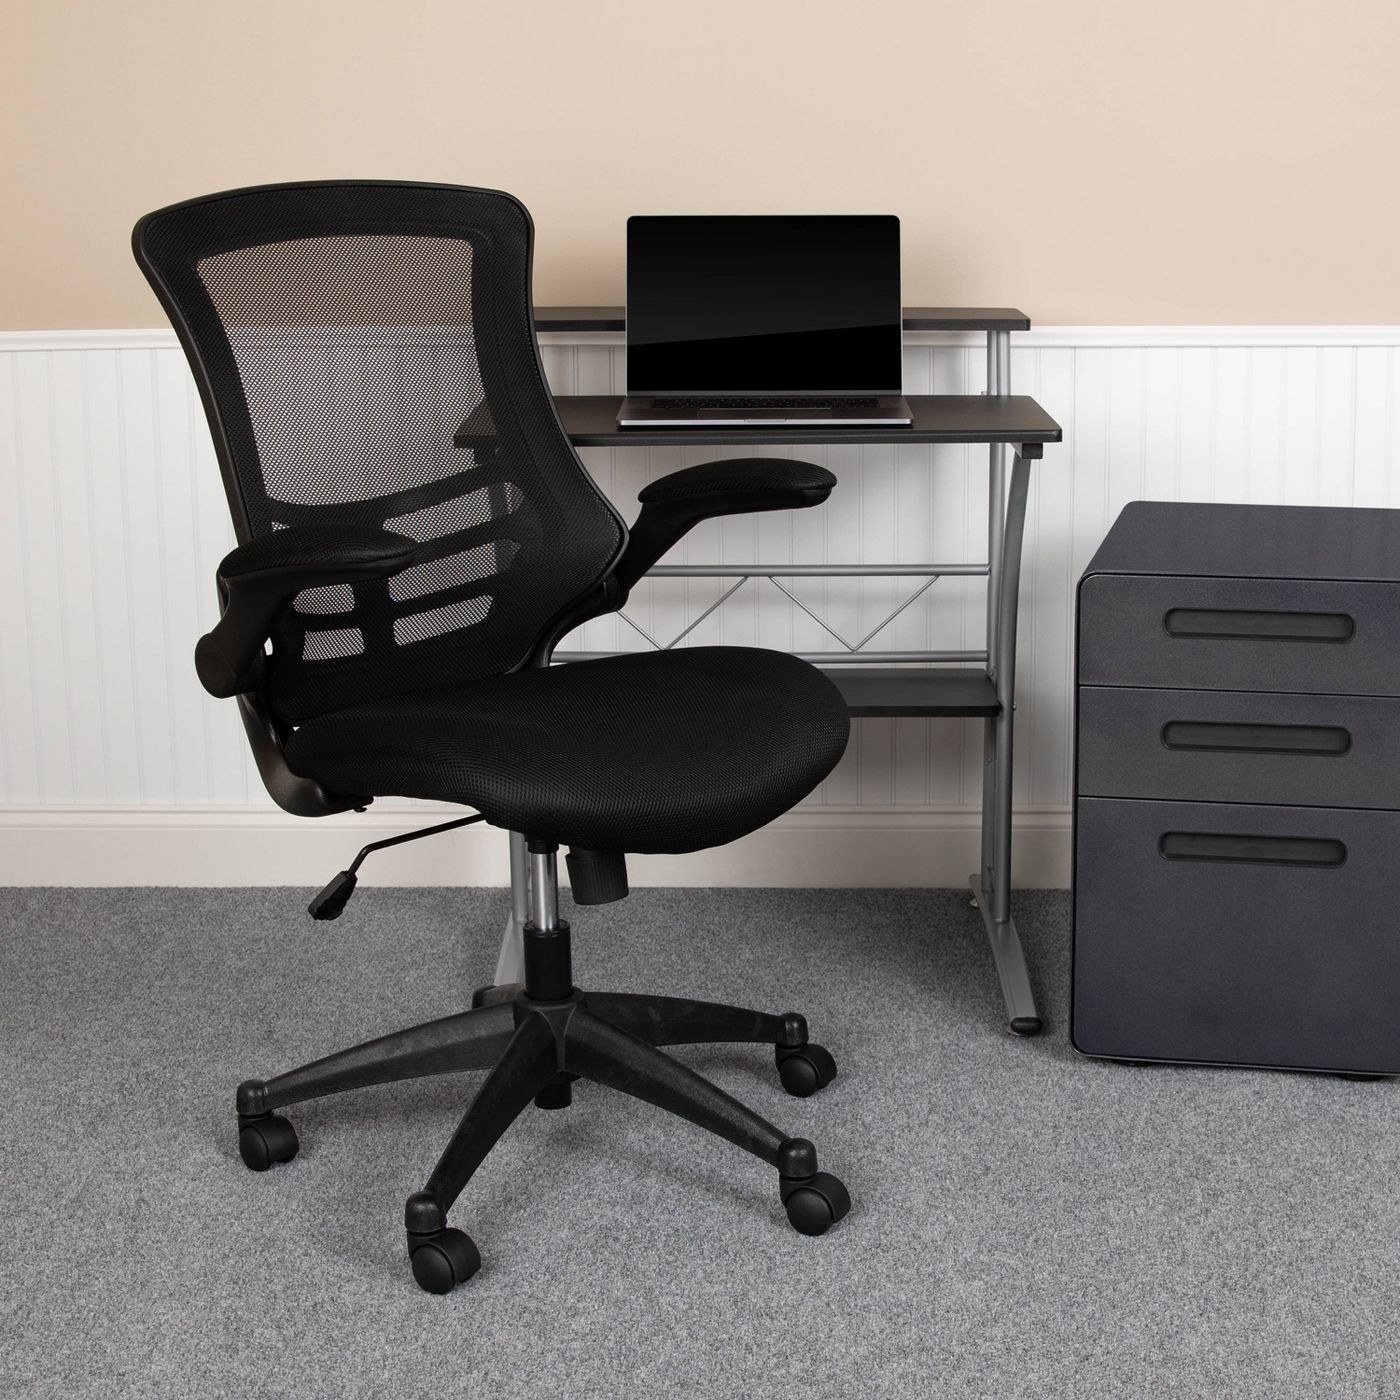 The mesh ergonomic swivel task chair 